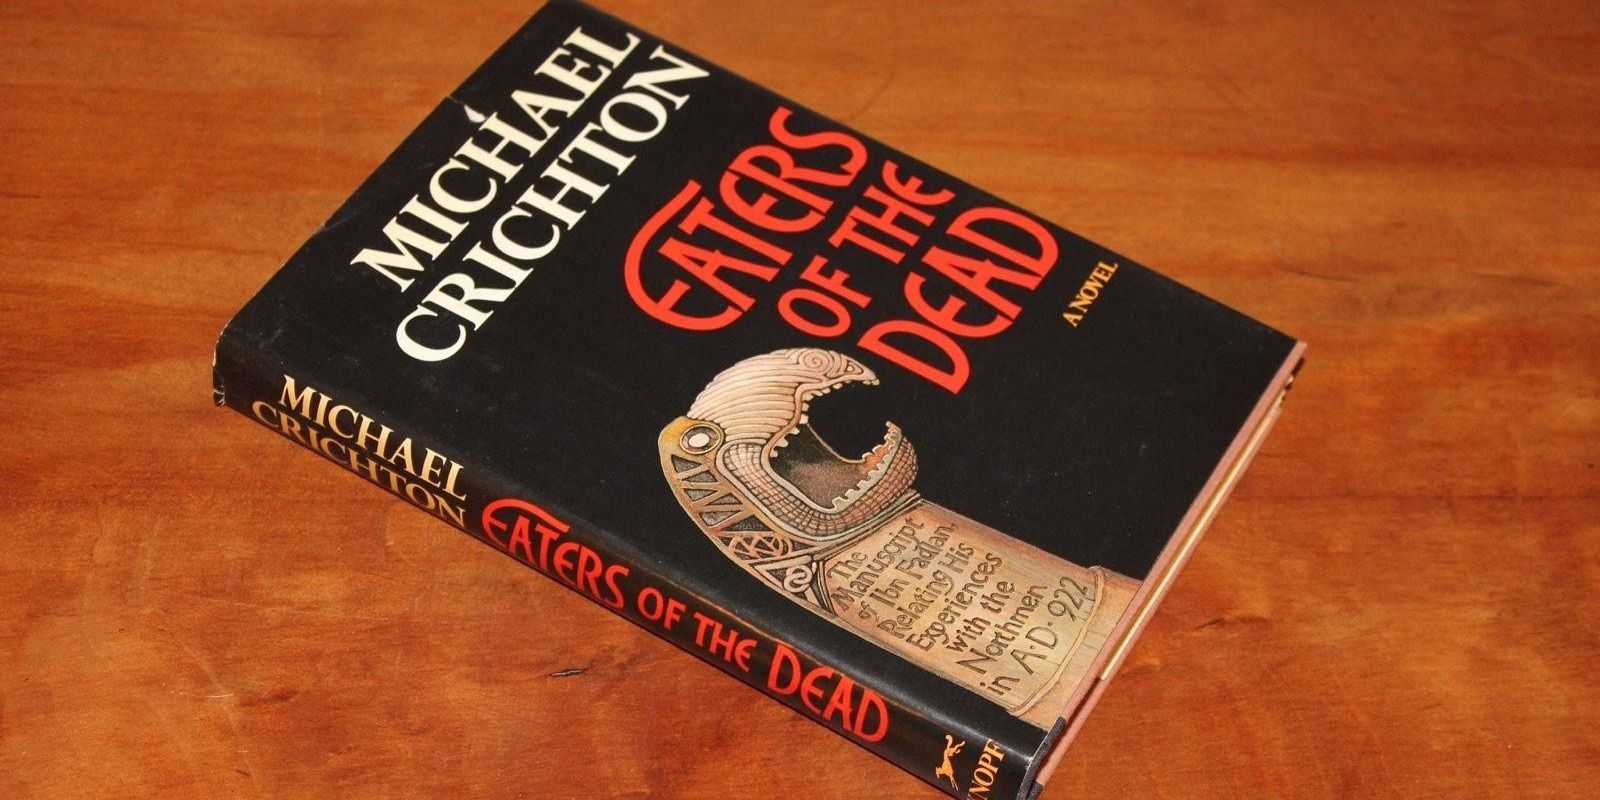 Michael Crichton's Novel Eaters of the Dead